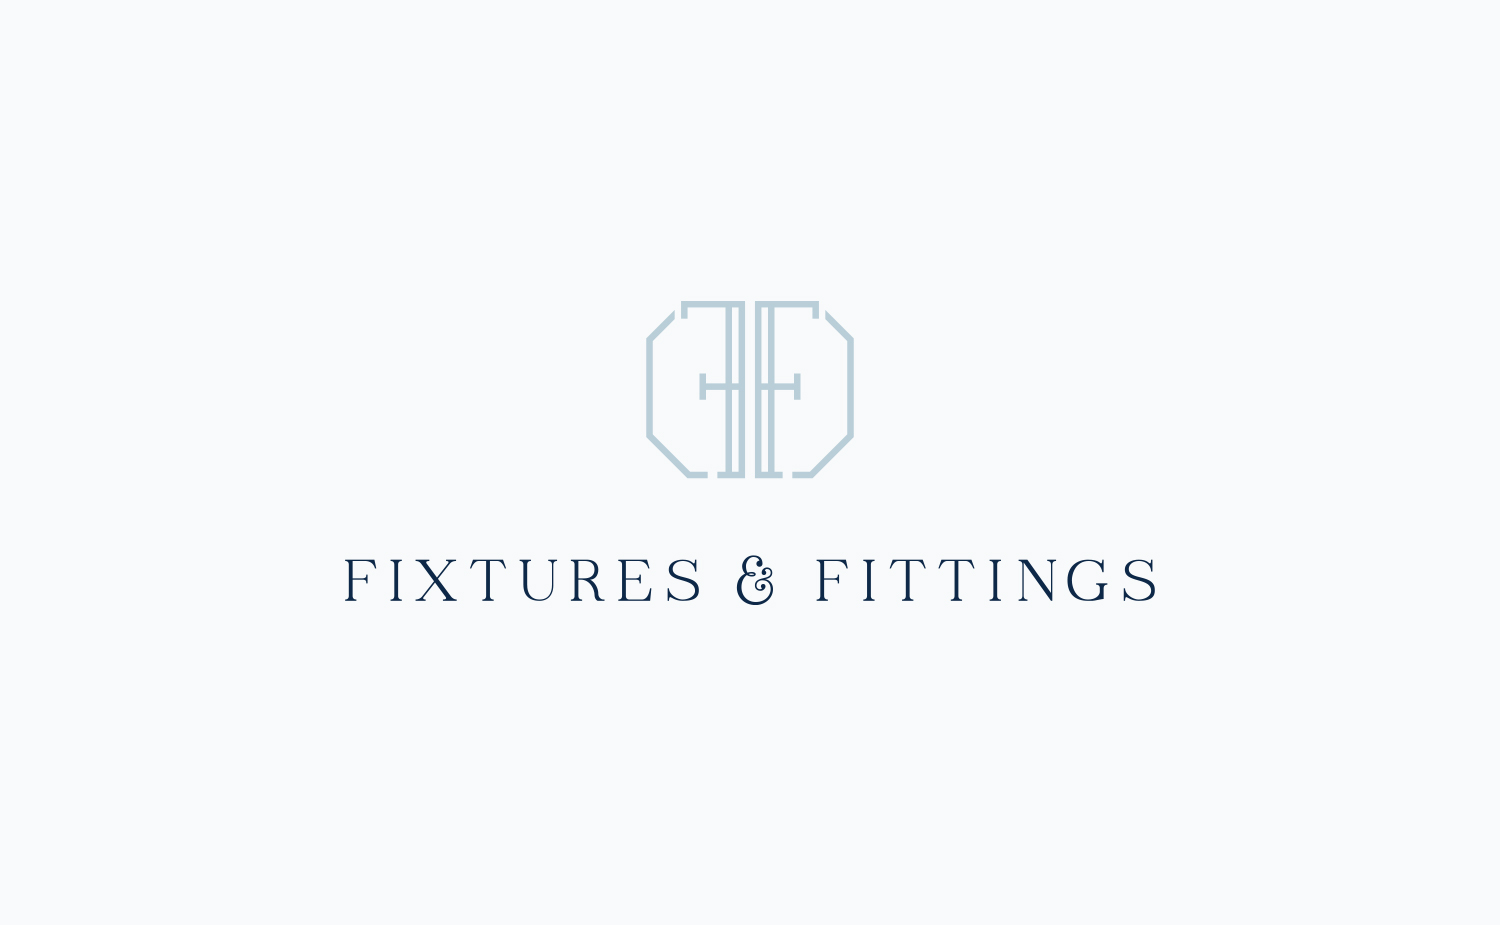 Fixtures & Fittings - Neiter Creative